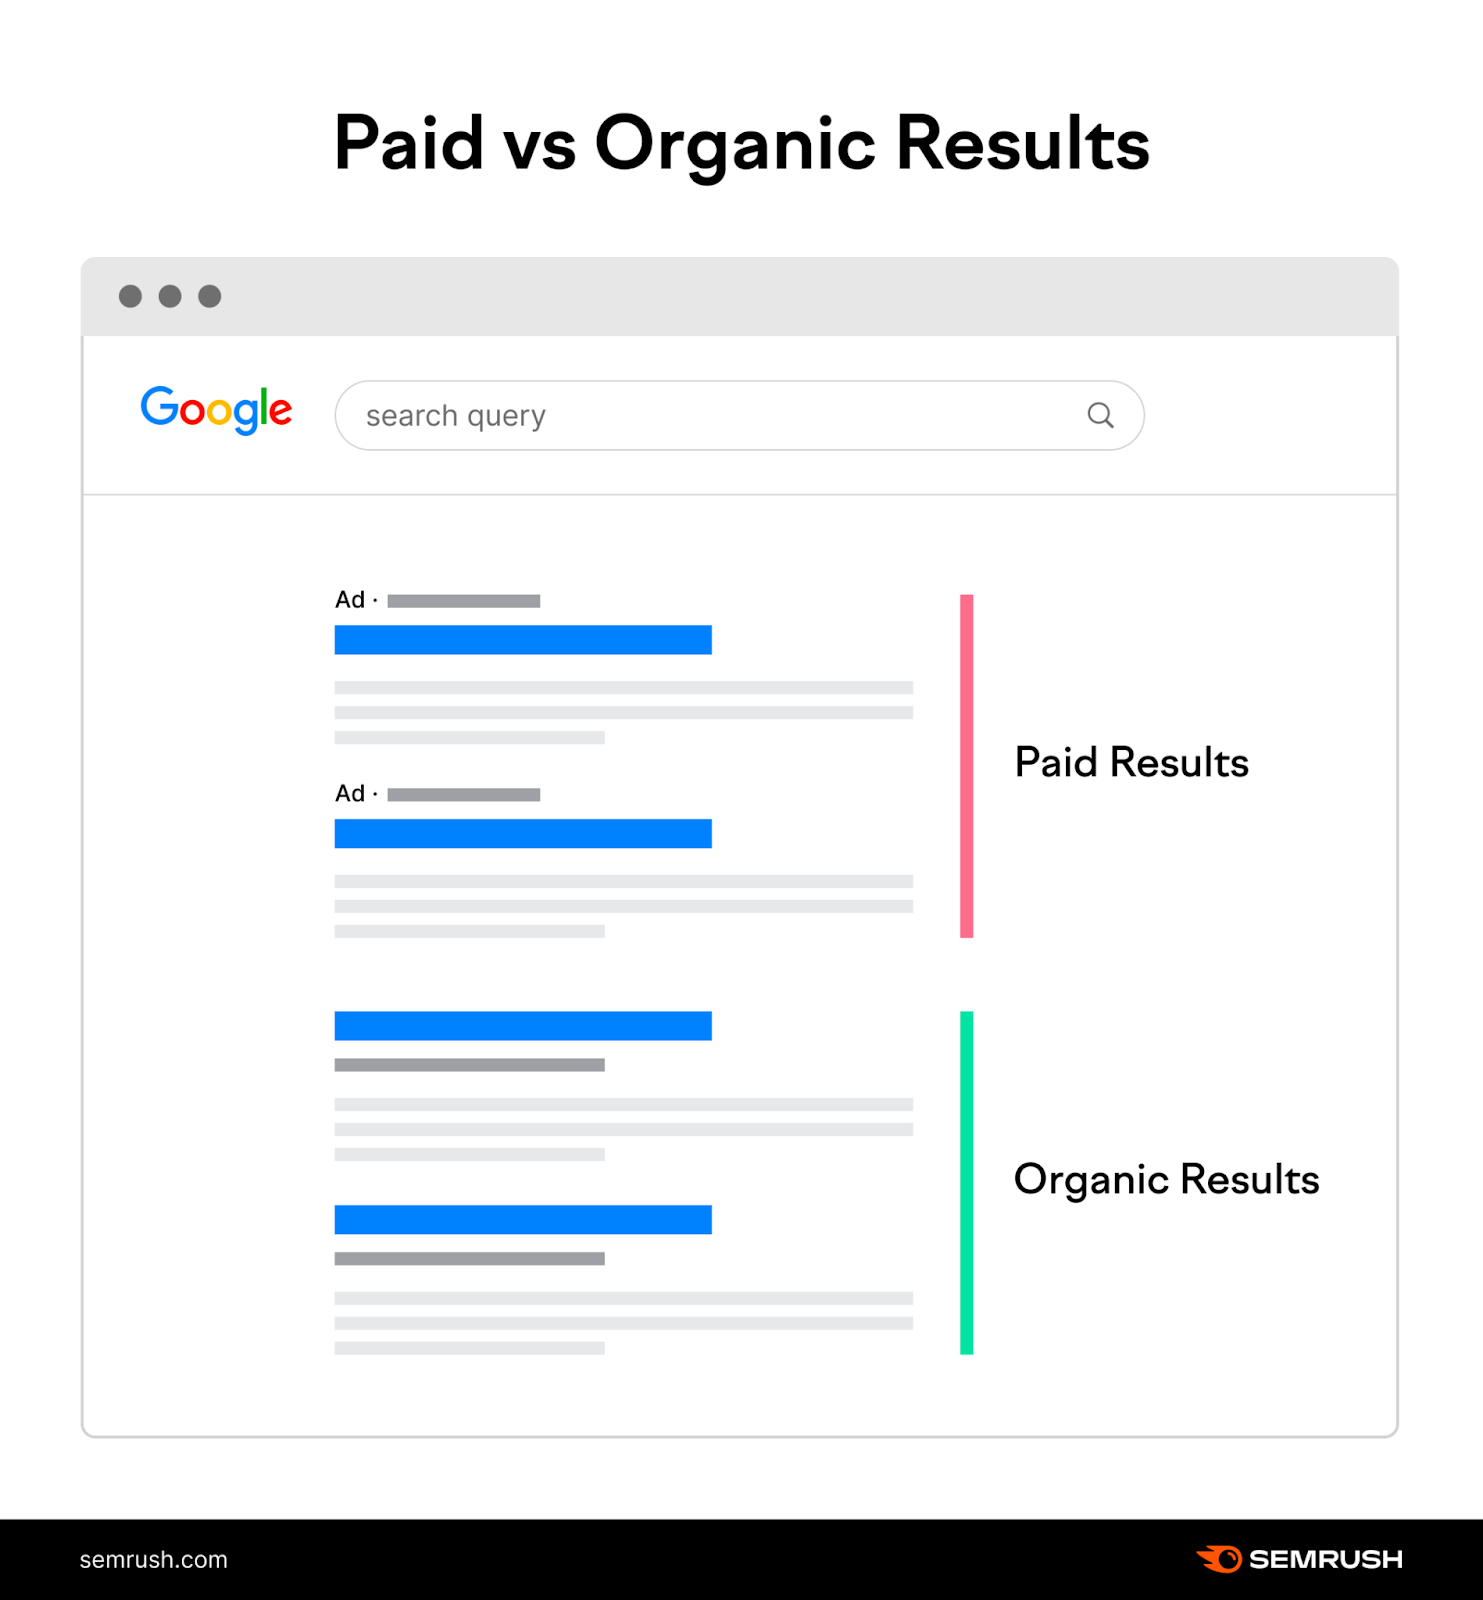 Paid vs organic results